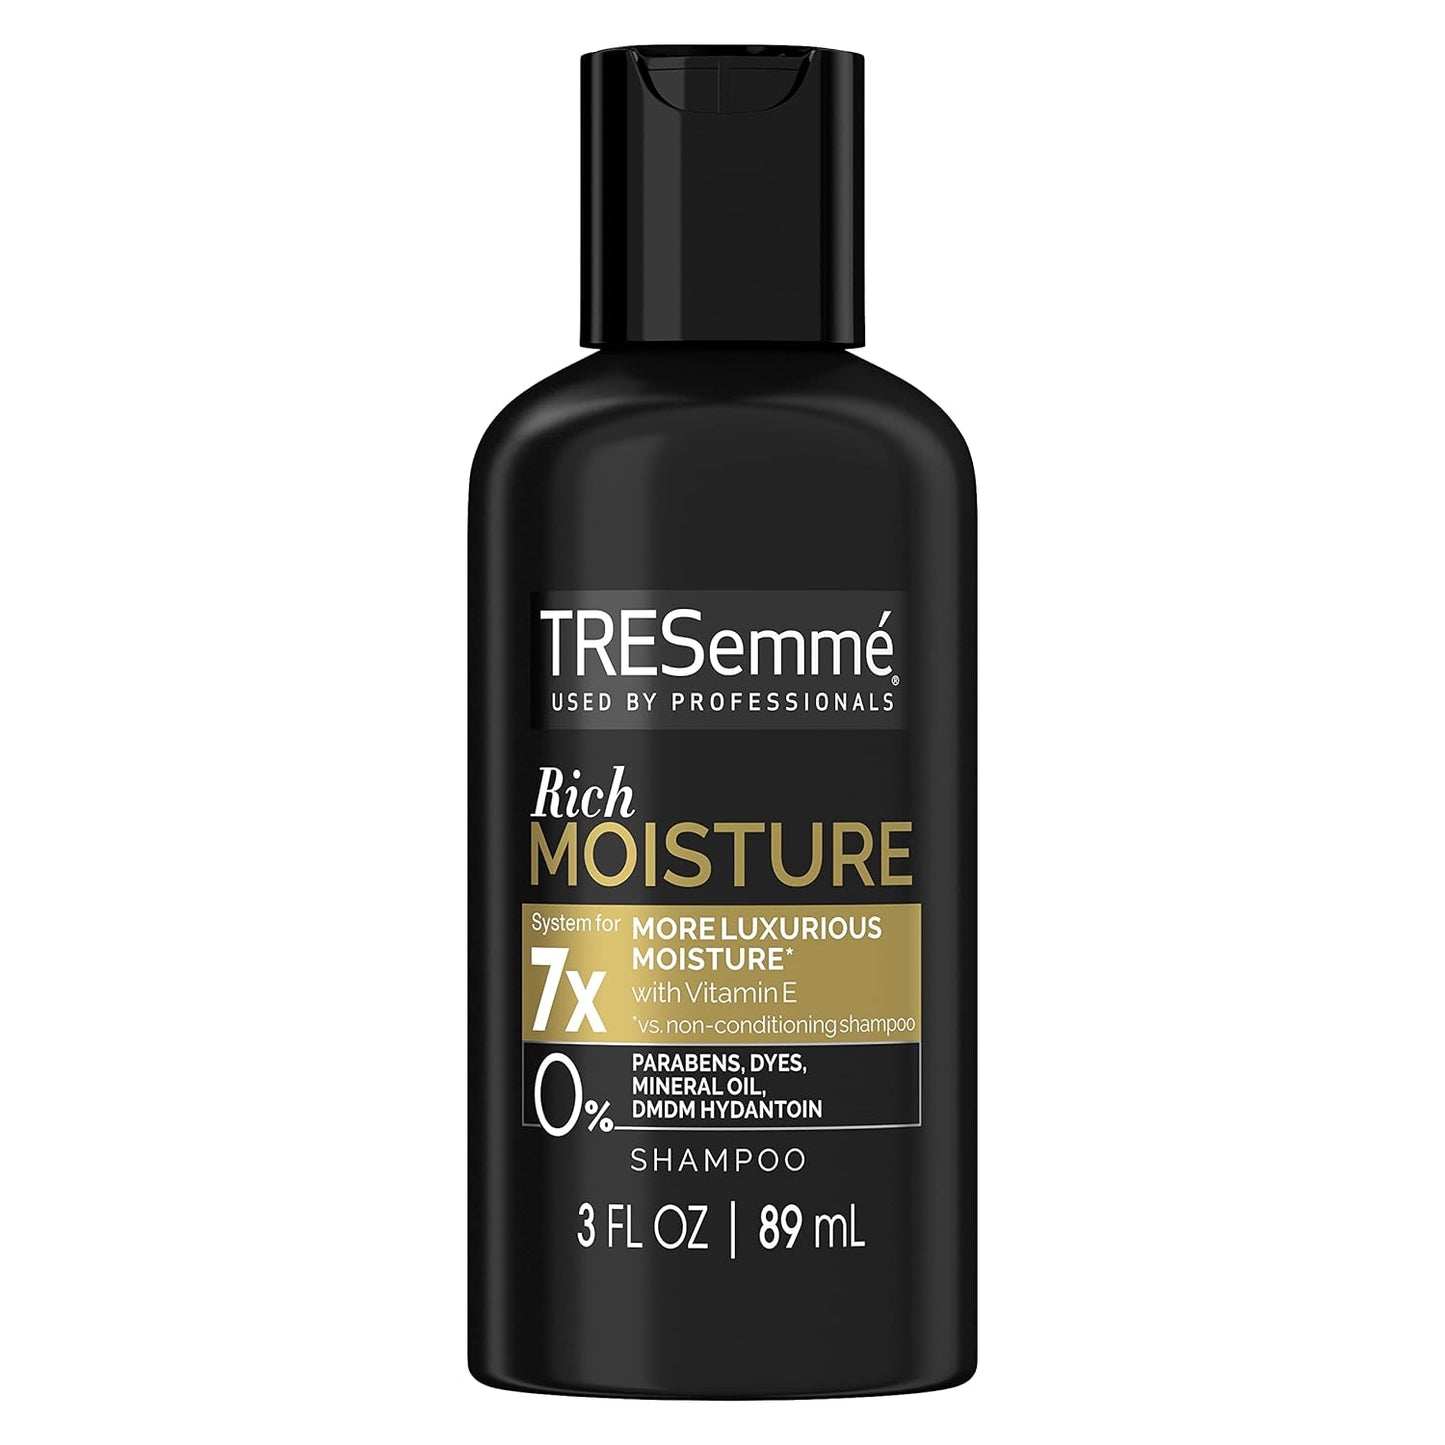 Tresemme Shampoo Moisture Rich, 3 oz - $1.45 Each (12 Pack)